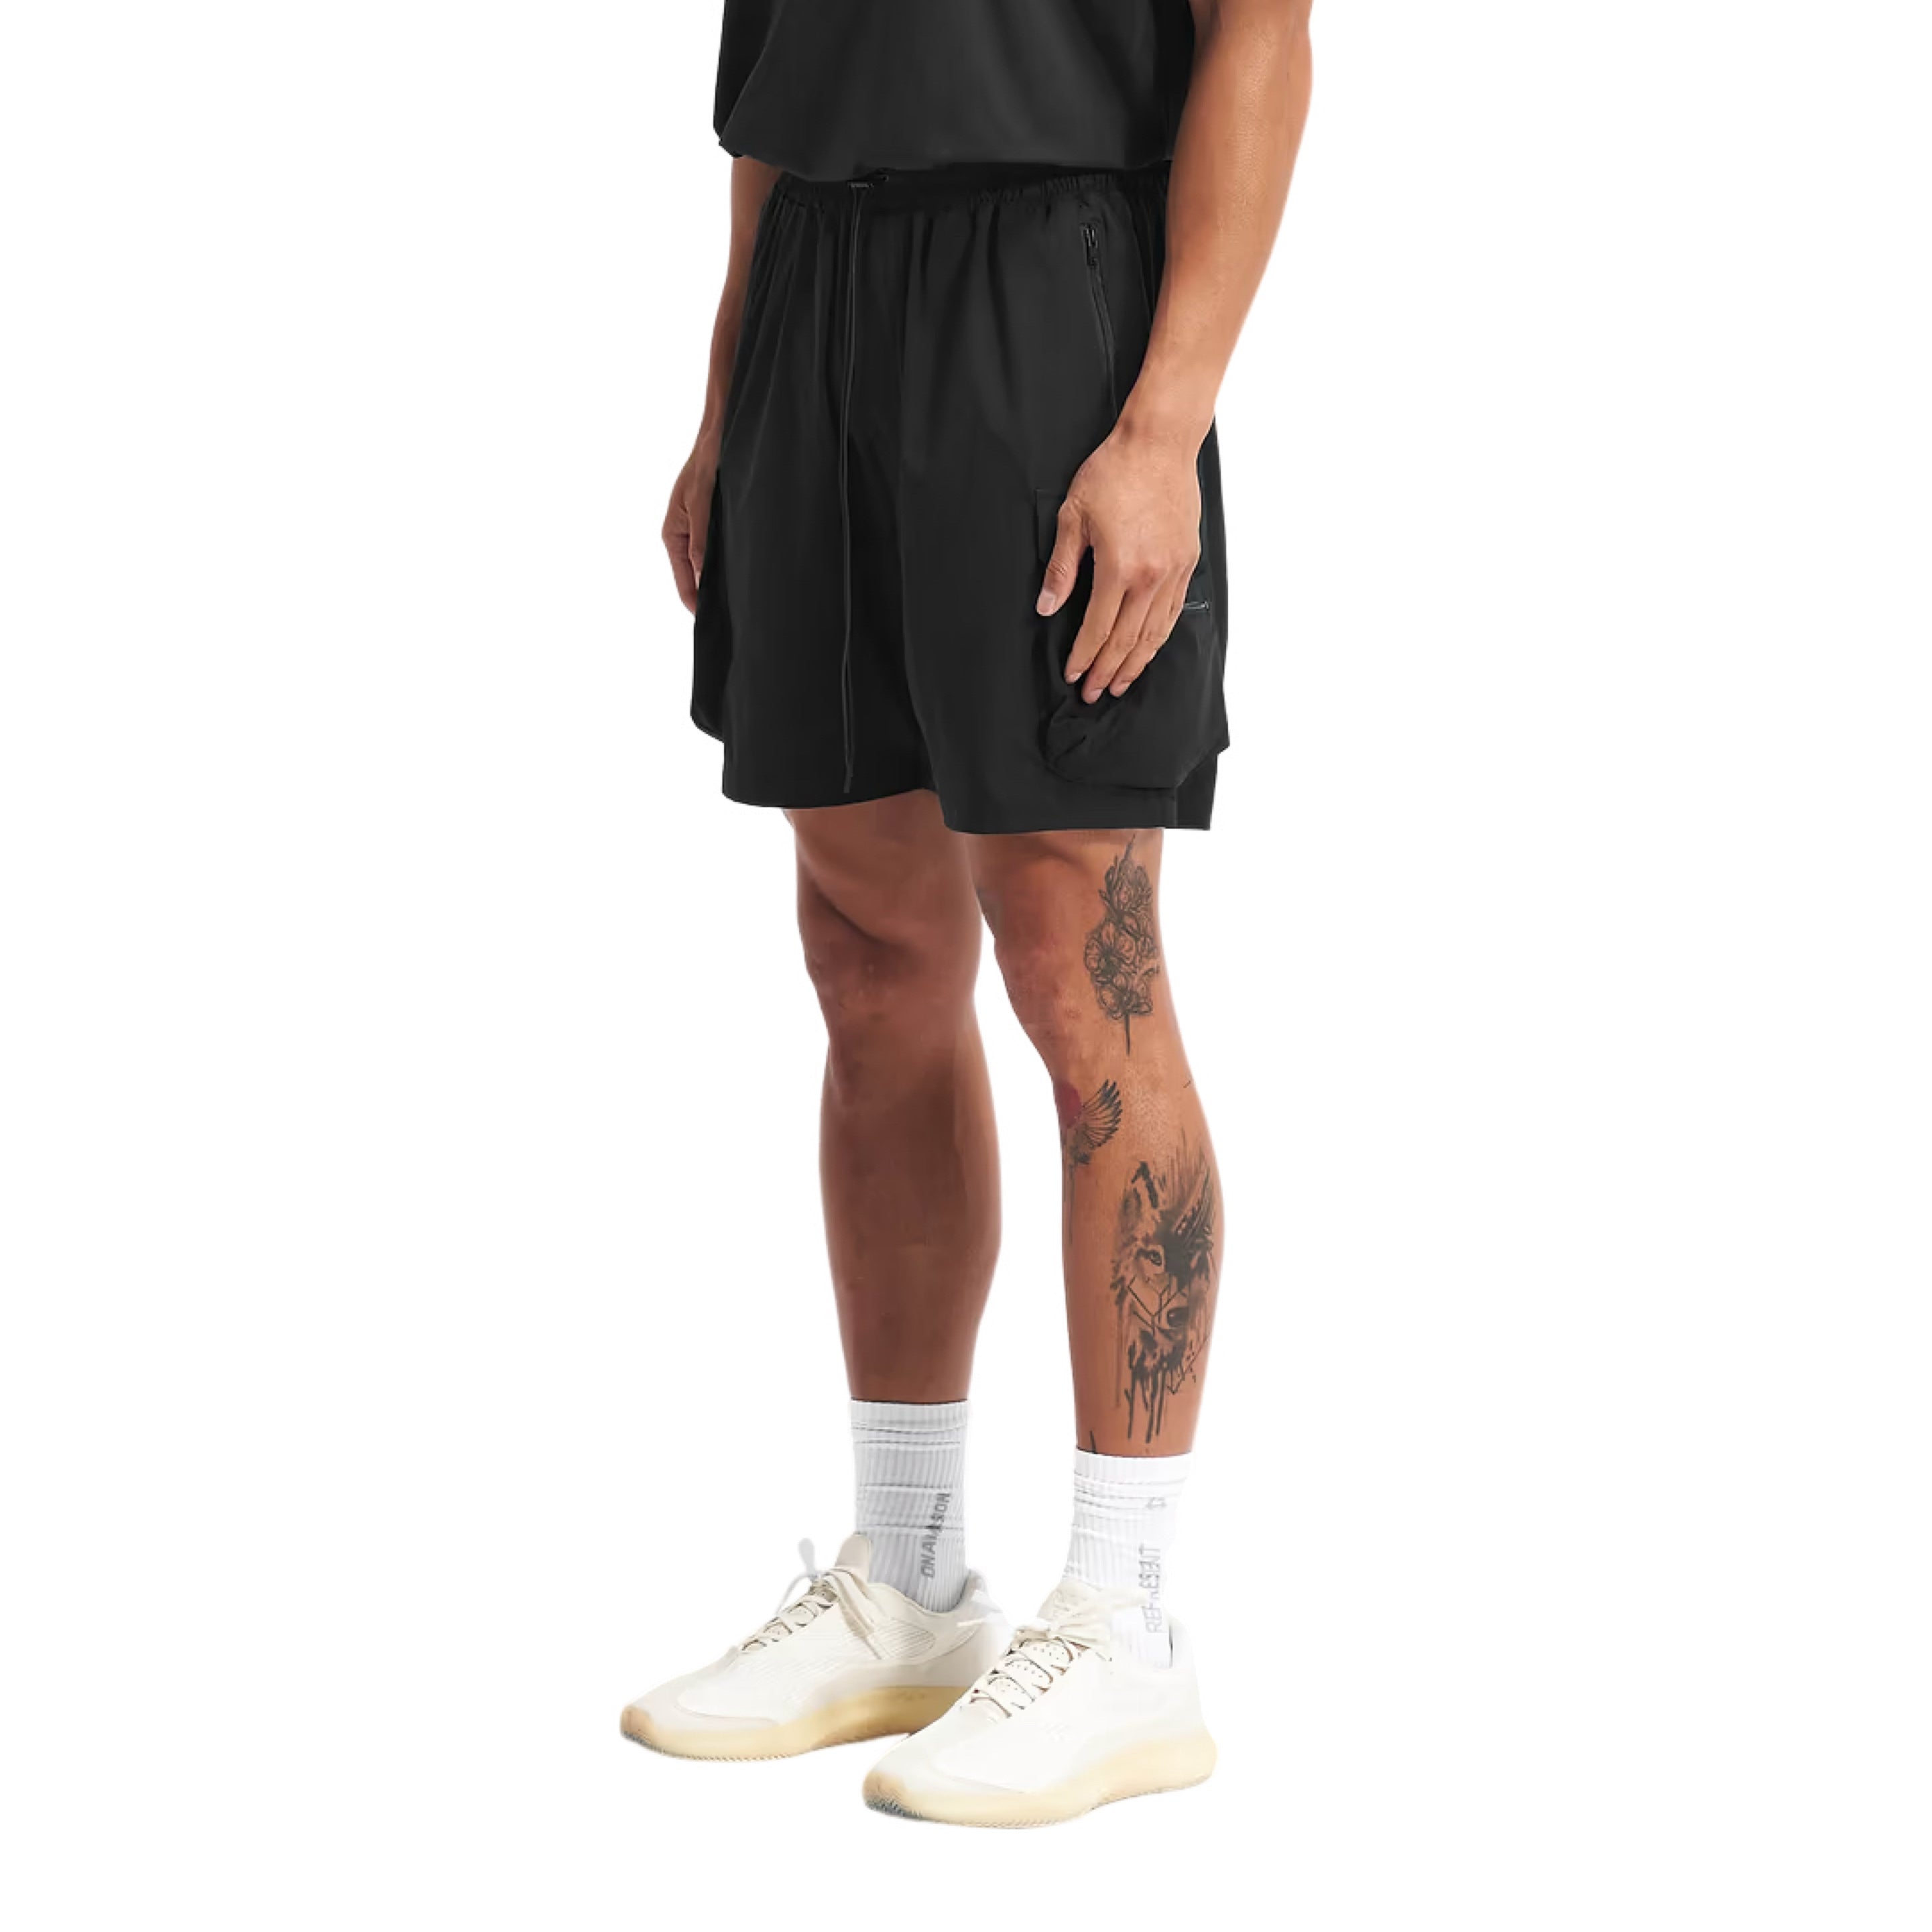 Represent XS 247 Shorts Black Cargo Shorts